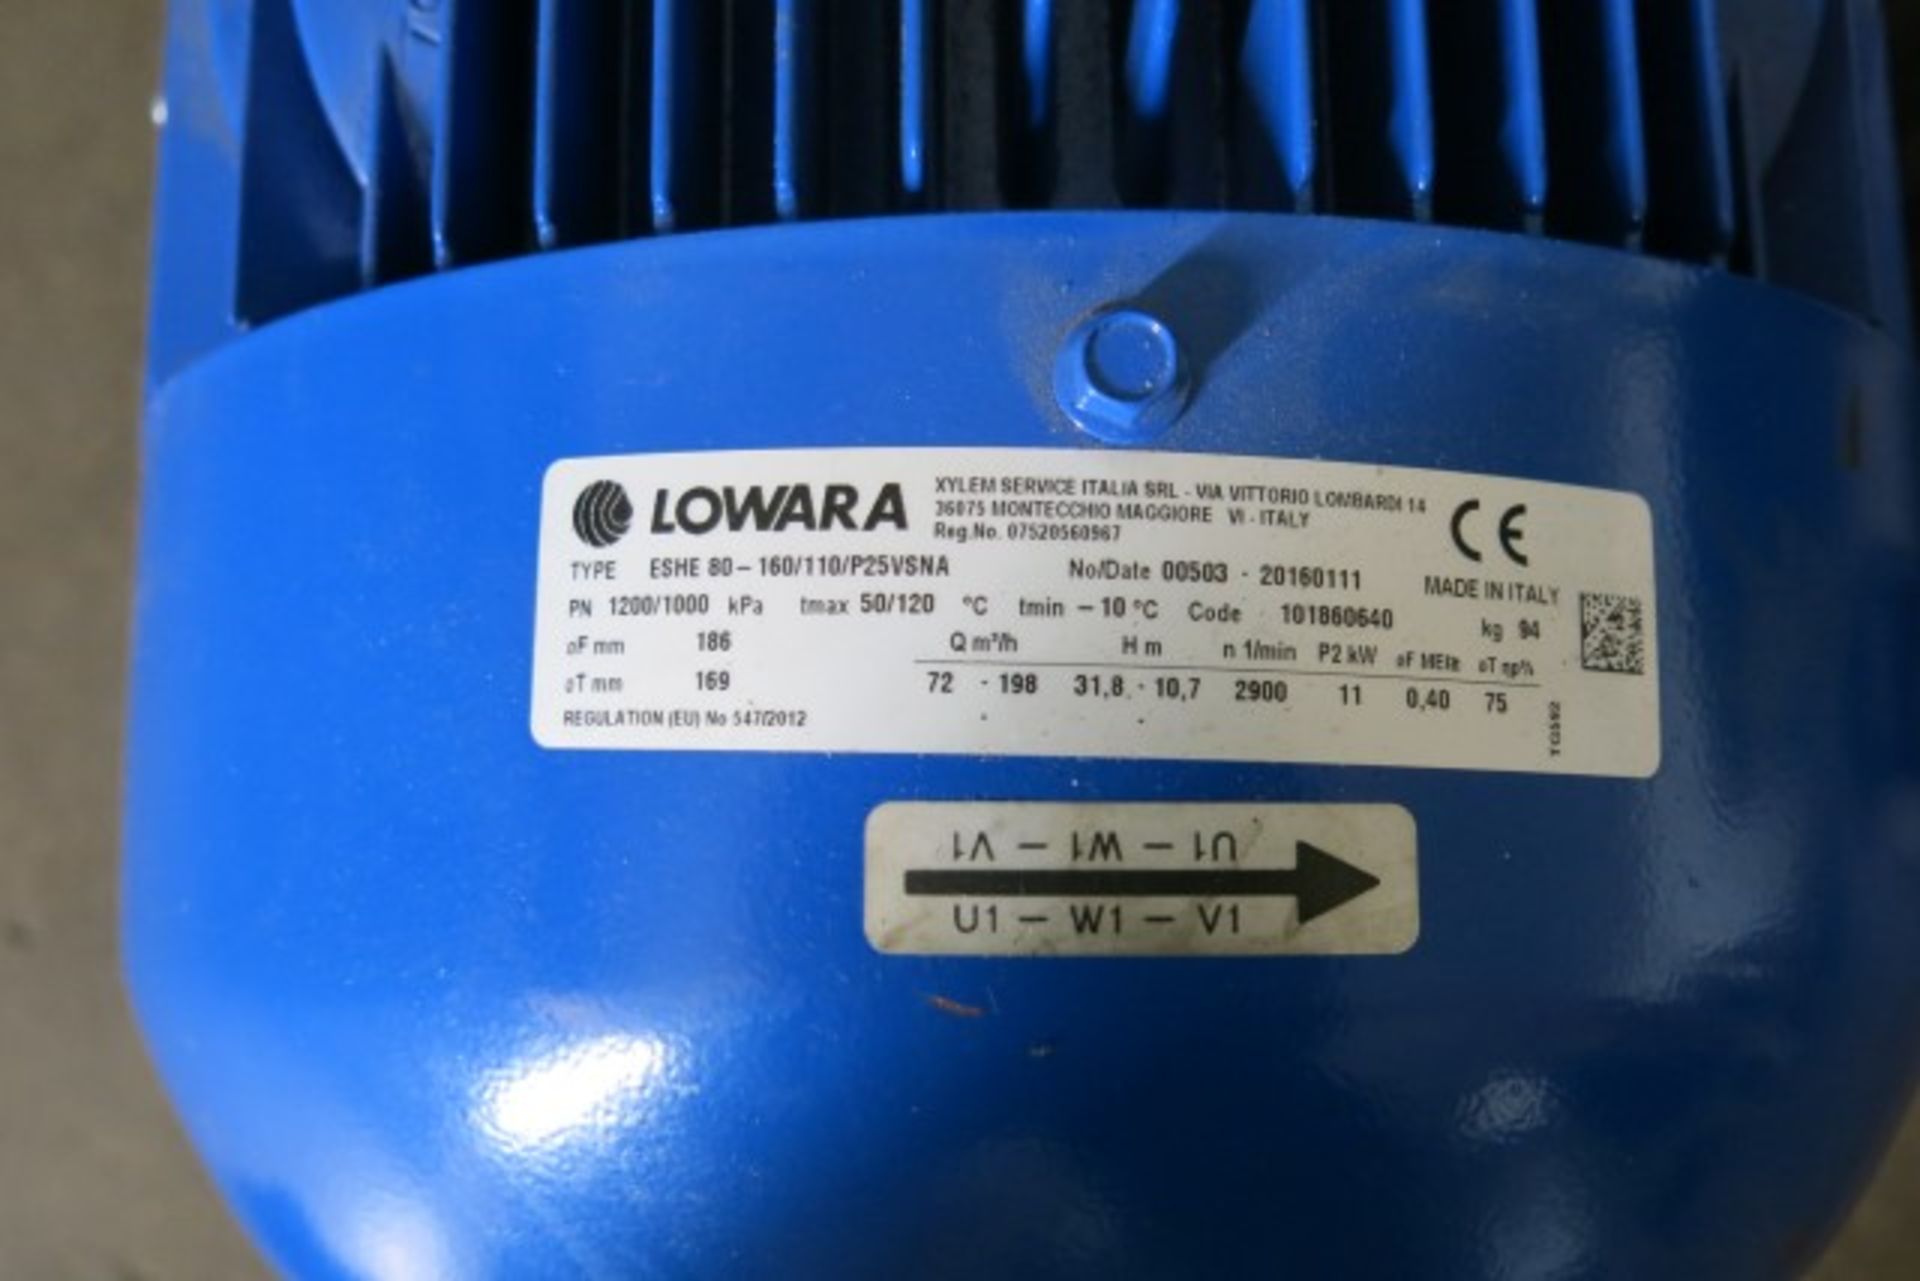 Lowara ESHE 80-160/110/P25VSNA centrifugal pump - Image 2 of 3